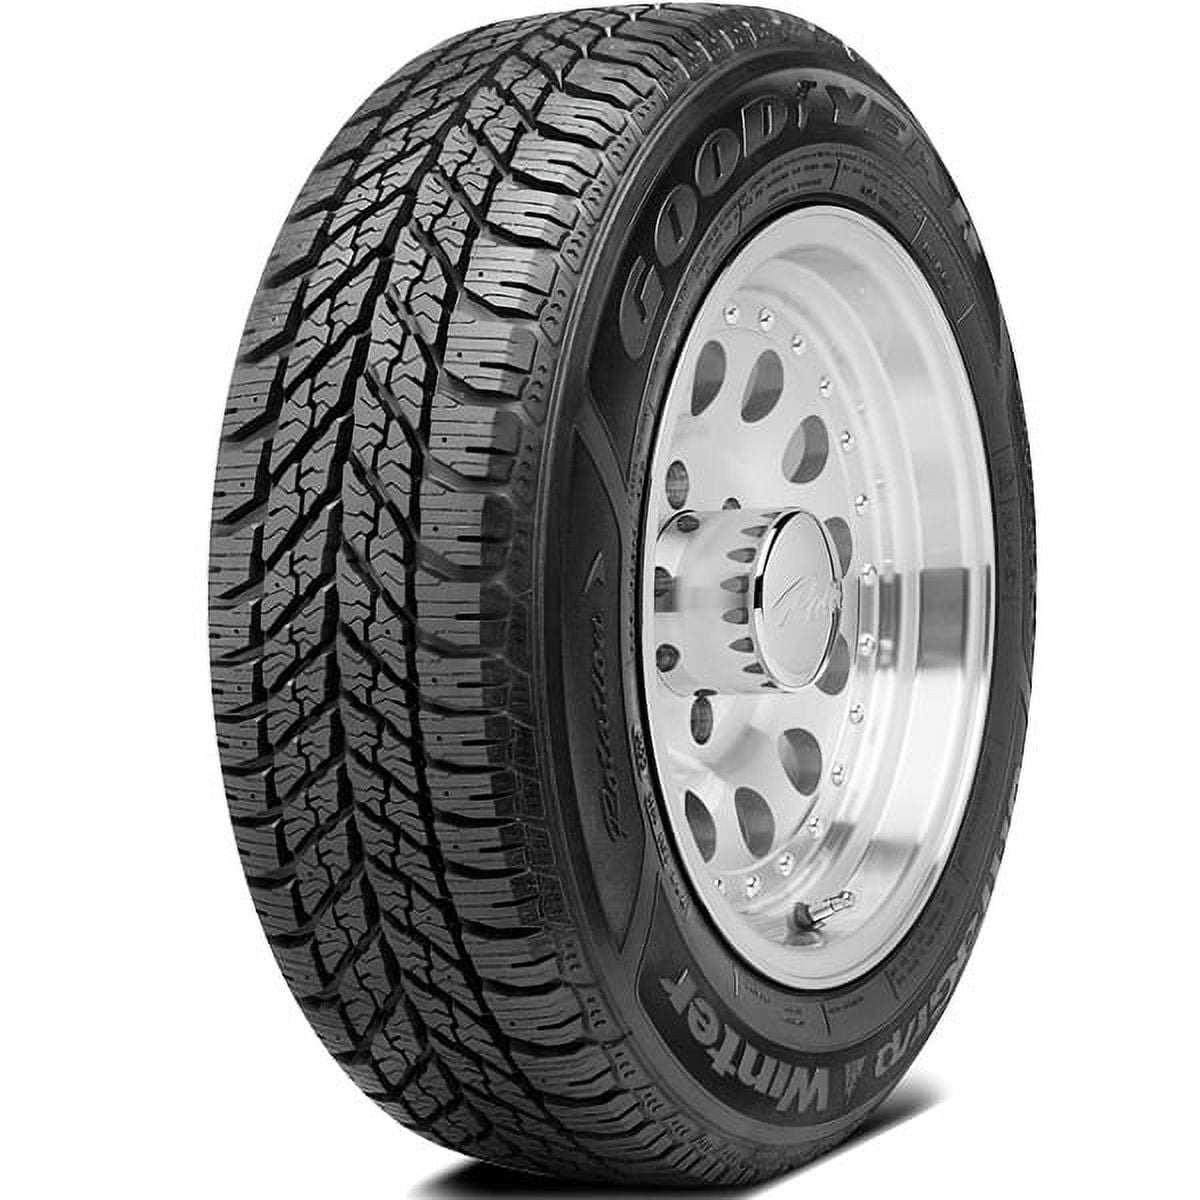 1 New Goodyear Ultra Grip Winter 195/70R14 91T Tires 766736355 / 195/70/14  / 1957014